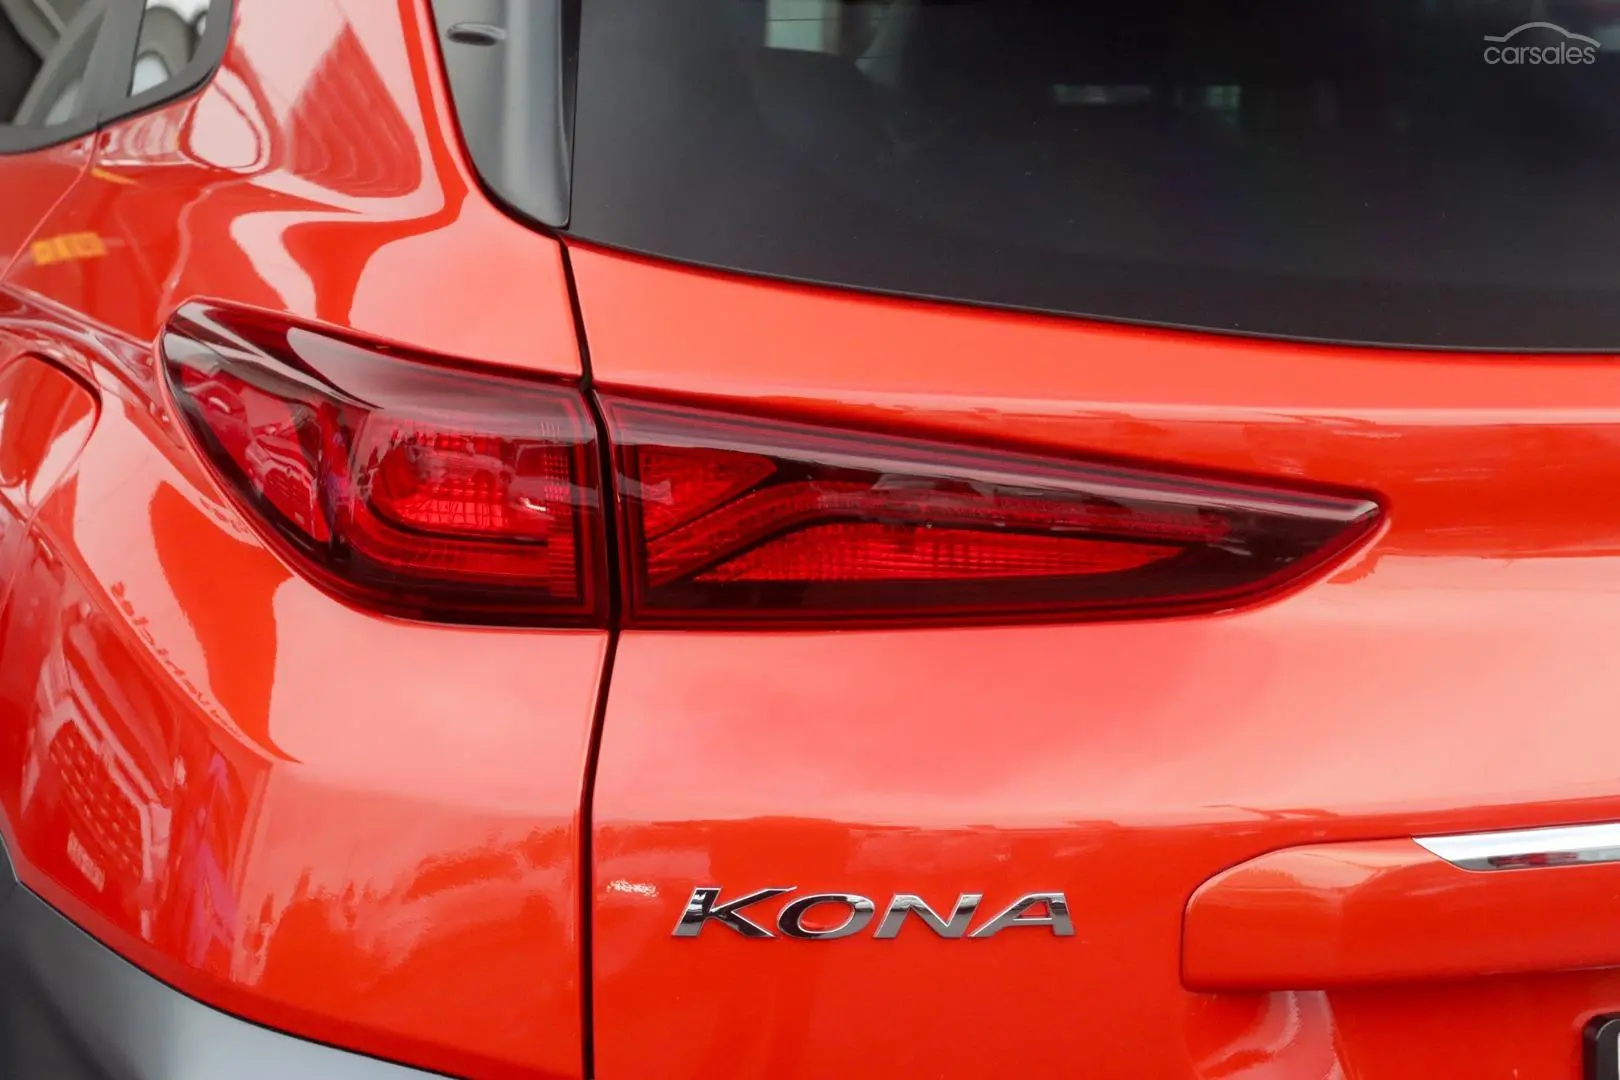 2019 Hyundai Kona Image 20